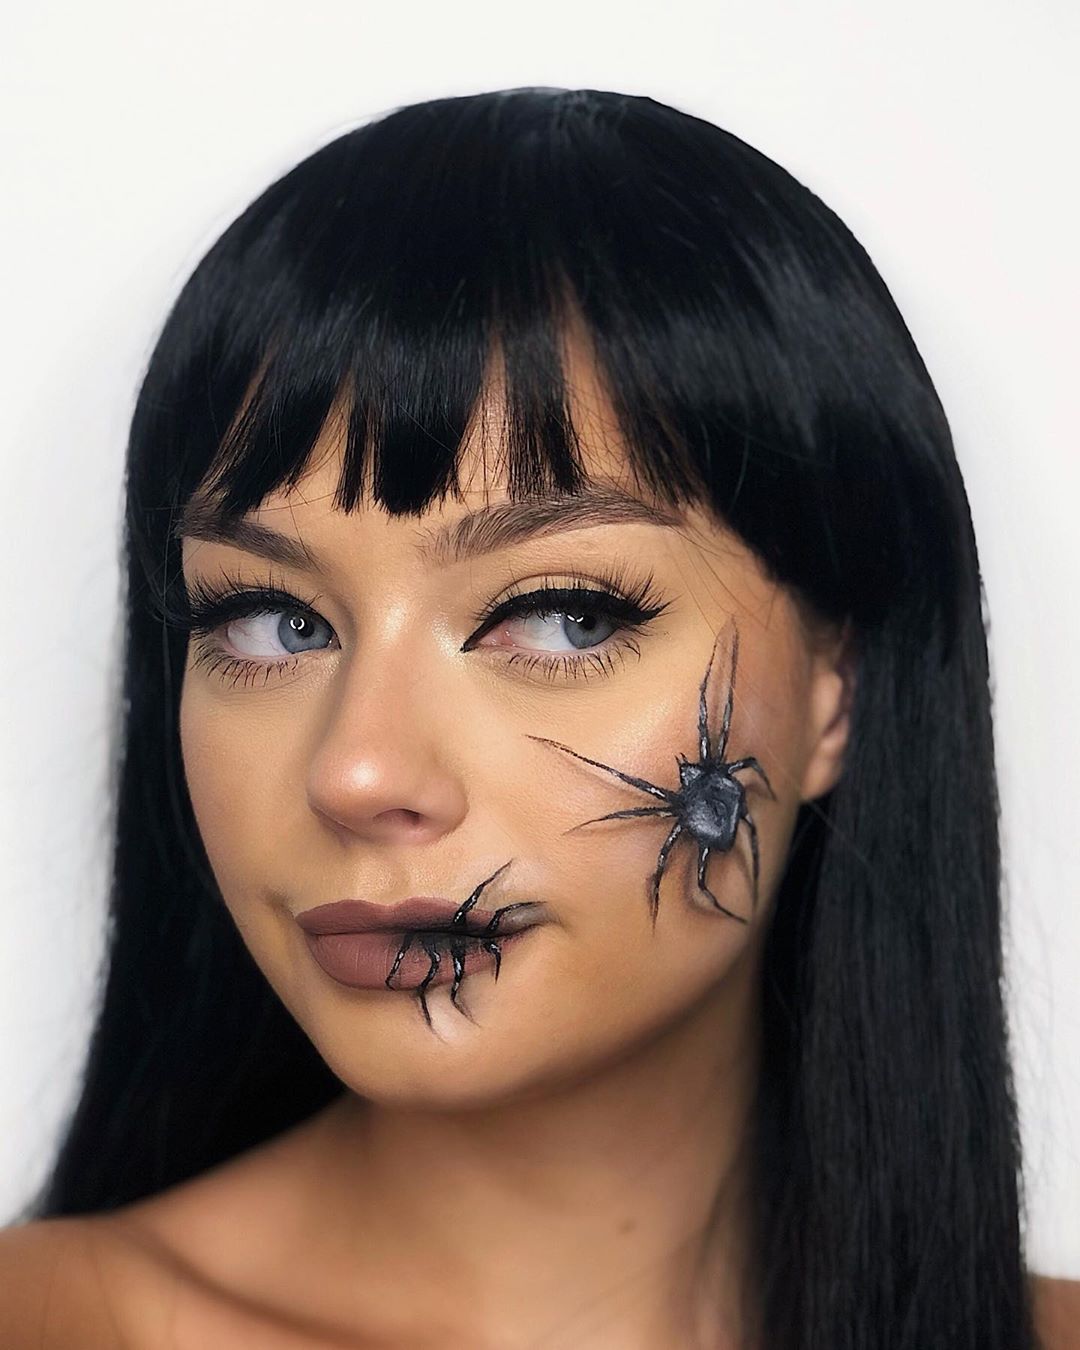 Scary Halloween makeup